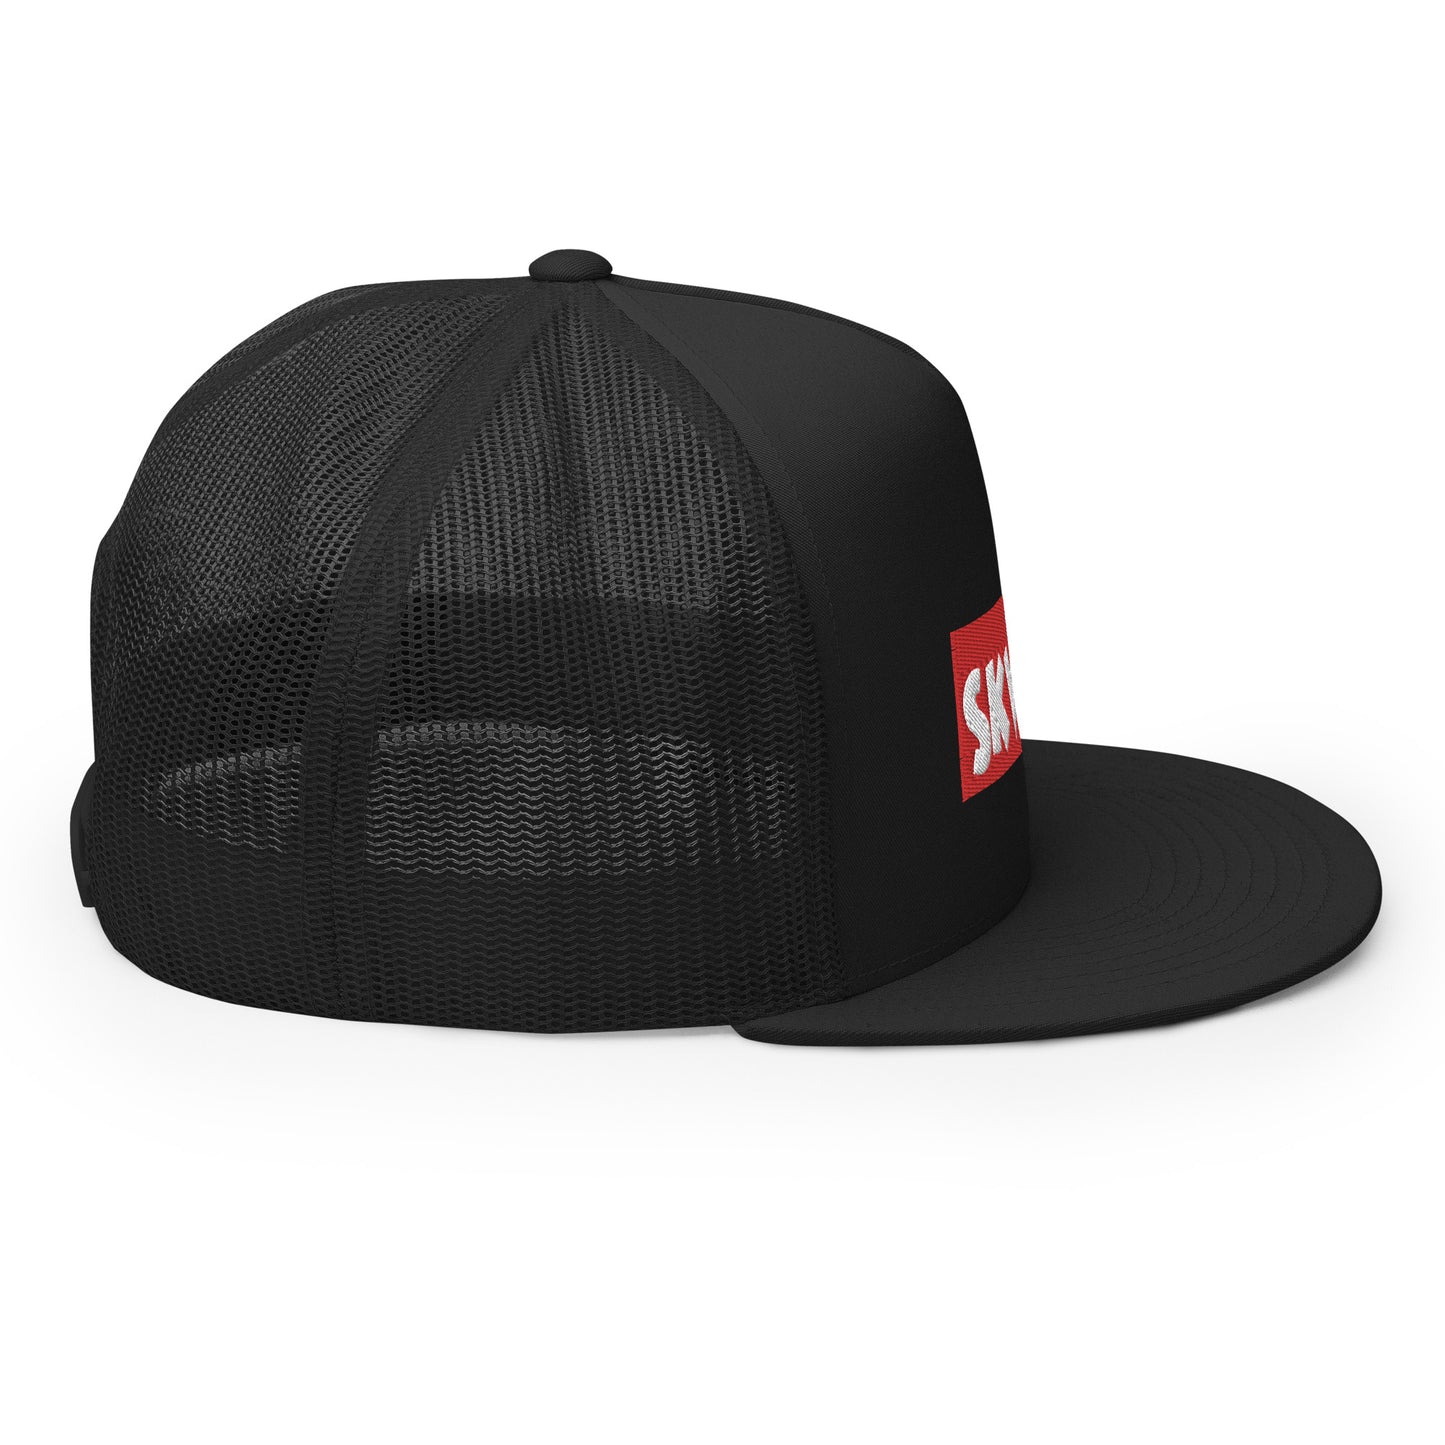 Skwok Brand / Hat / Trucker Cap / Box Logo / Black